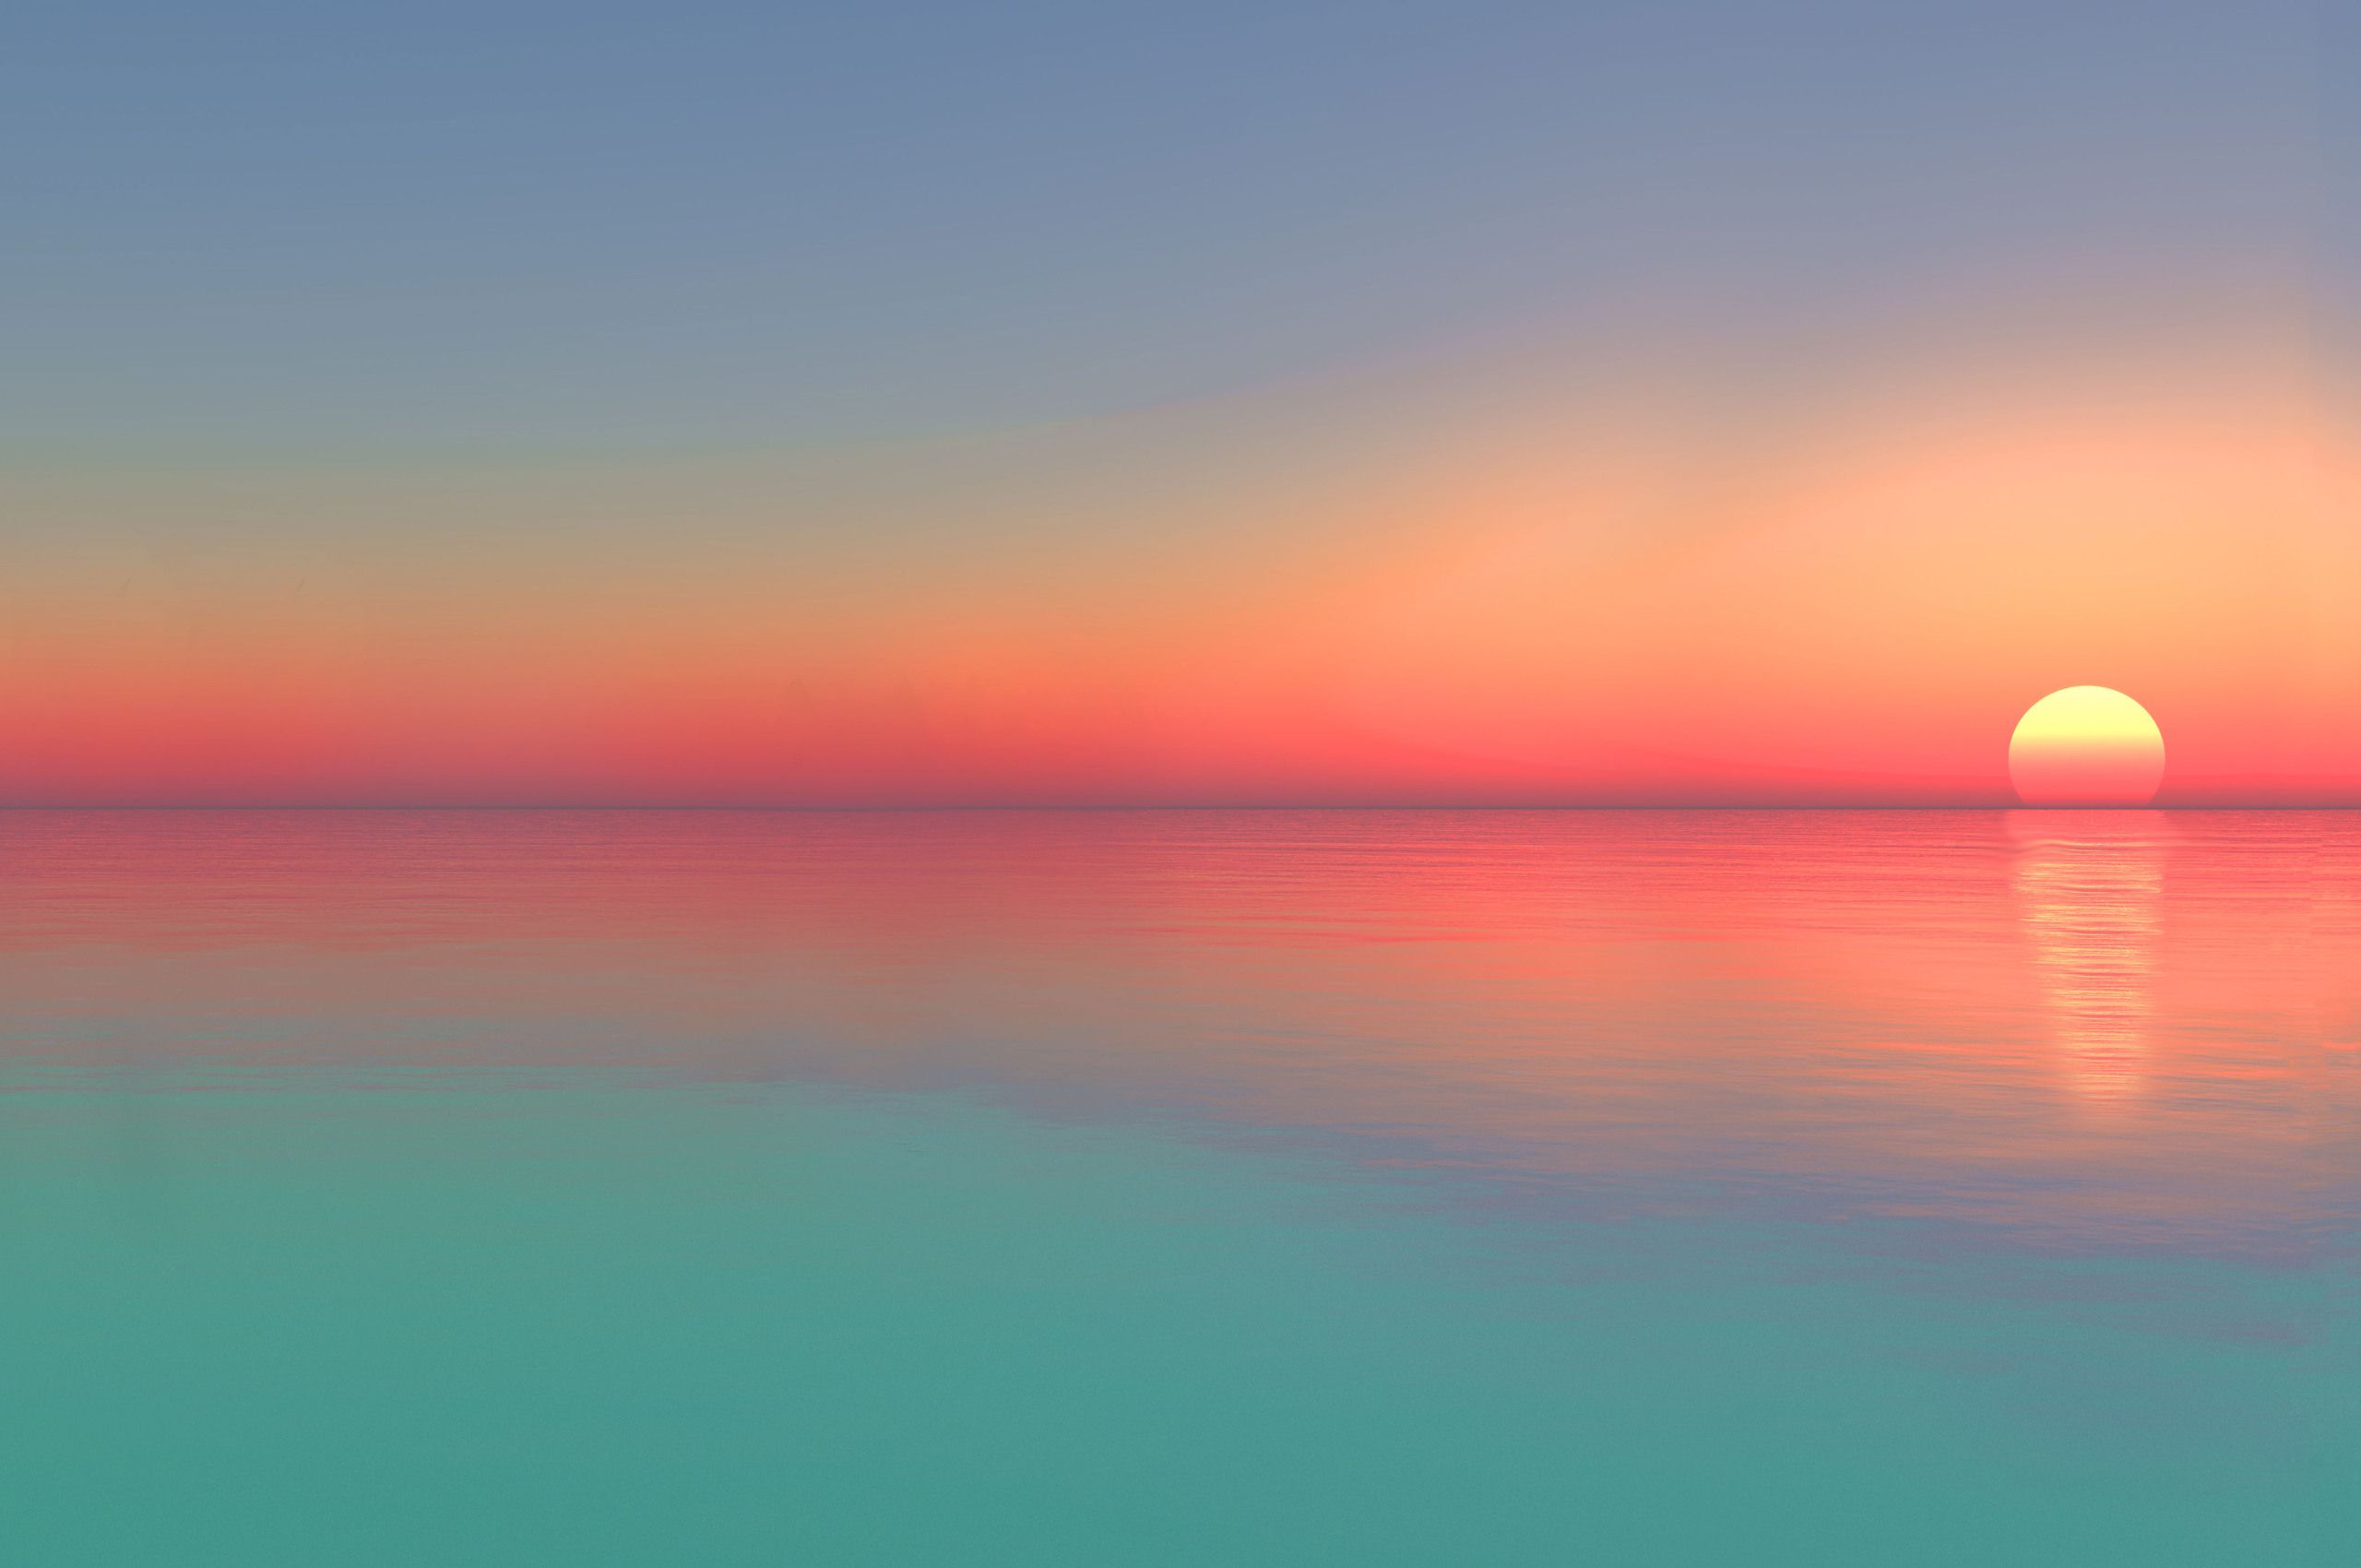 Calm Sunset Ocean Digital Art 5k Chromebook Pixel HD 4k Wallpaper, Image, Background, Photo and Picture